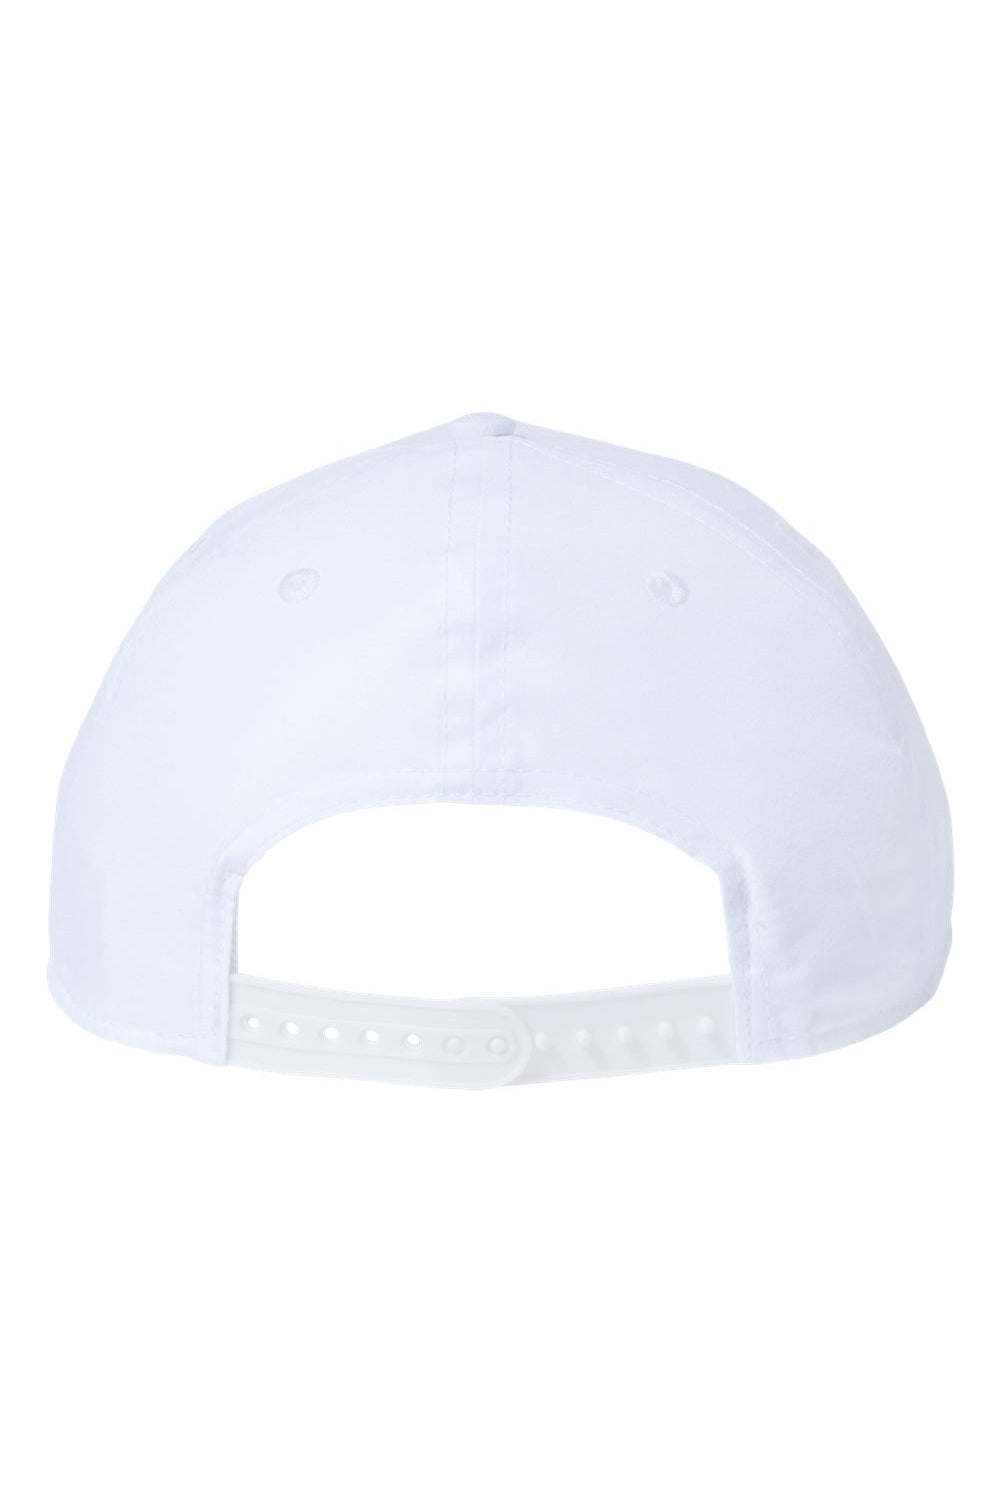 Atlantis Headwear REFE Mens Sustainable Recycled Feel Snapback Hat White Flat Back